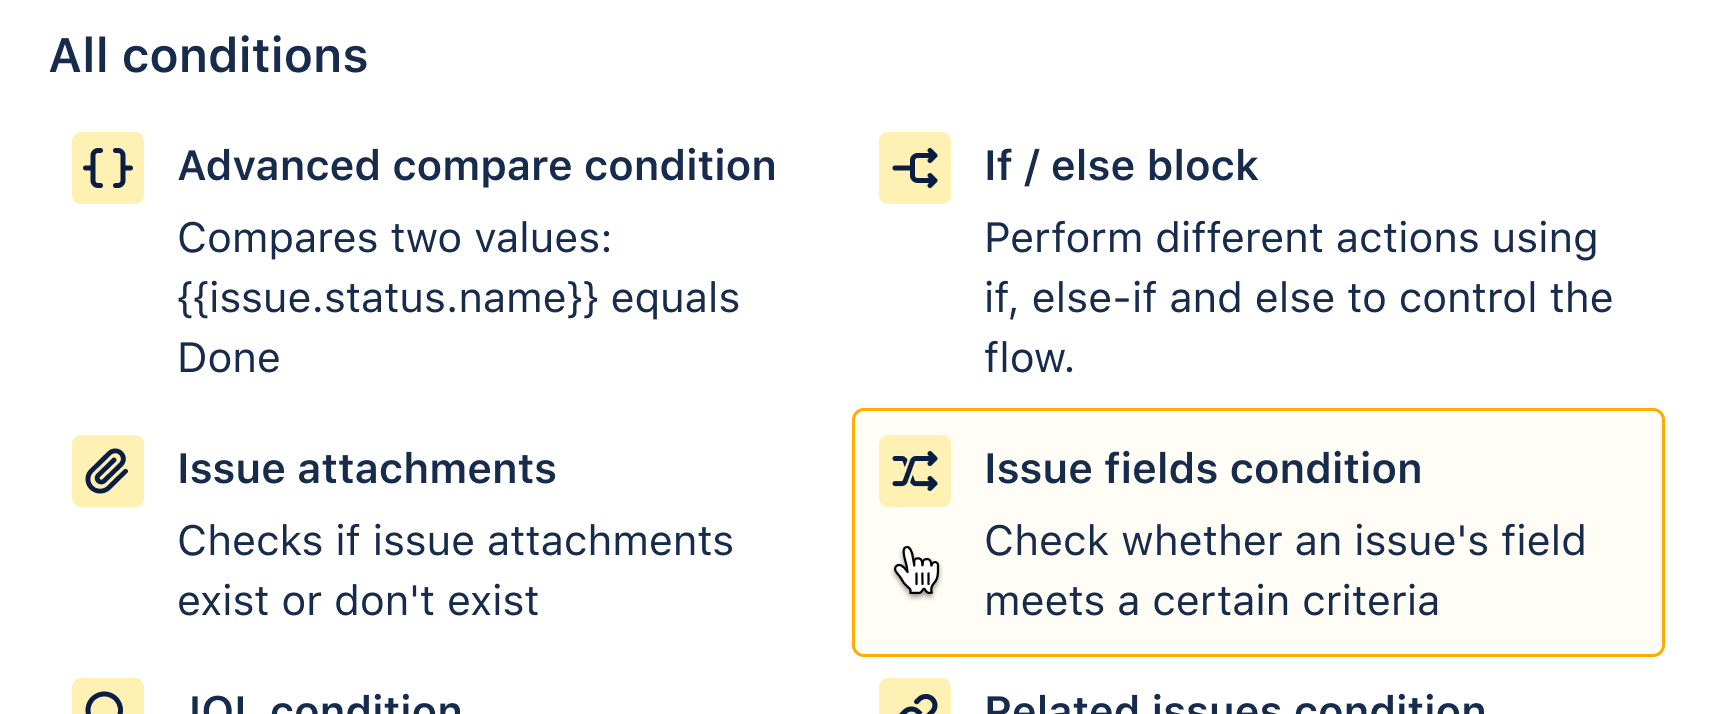 Adding Issue fields condition